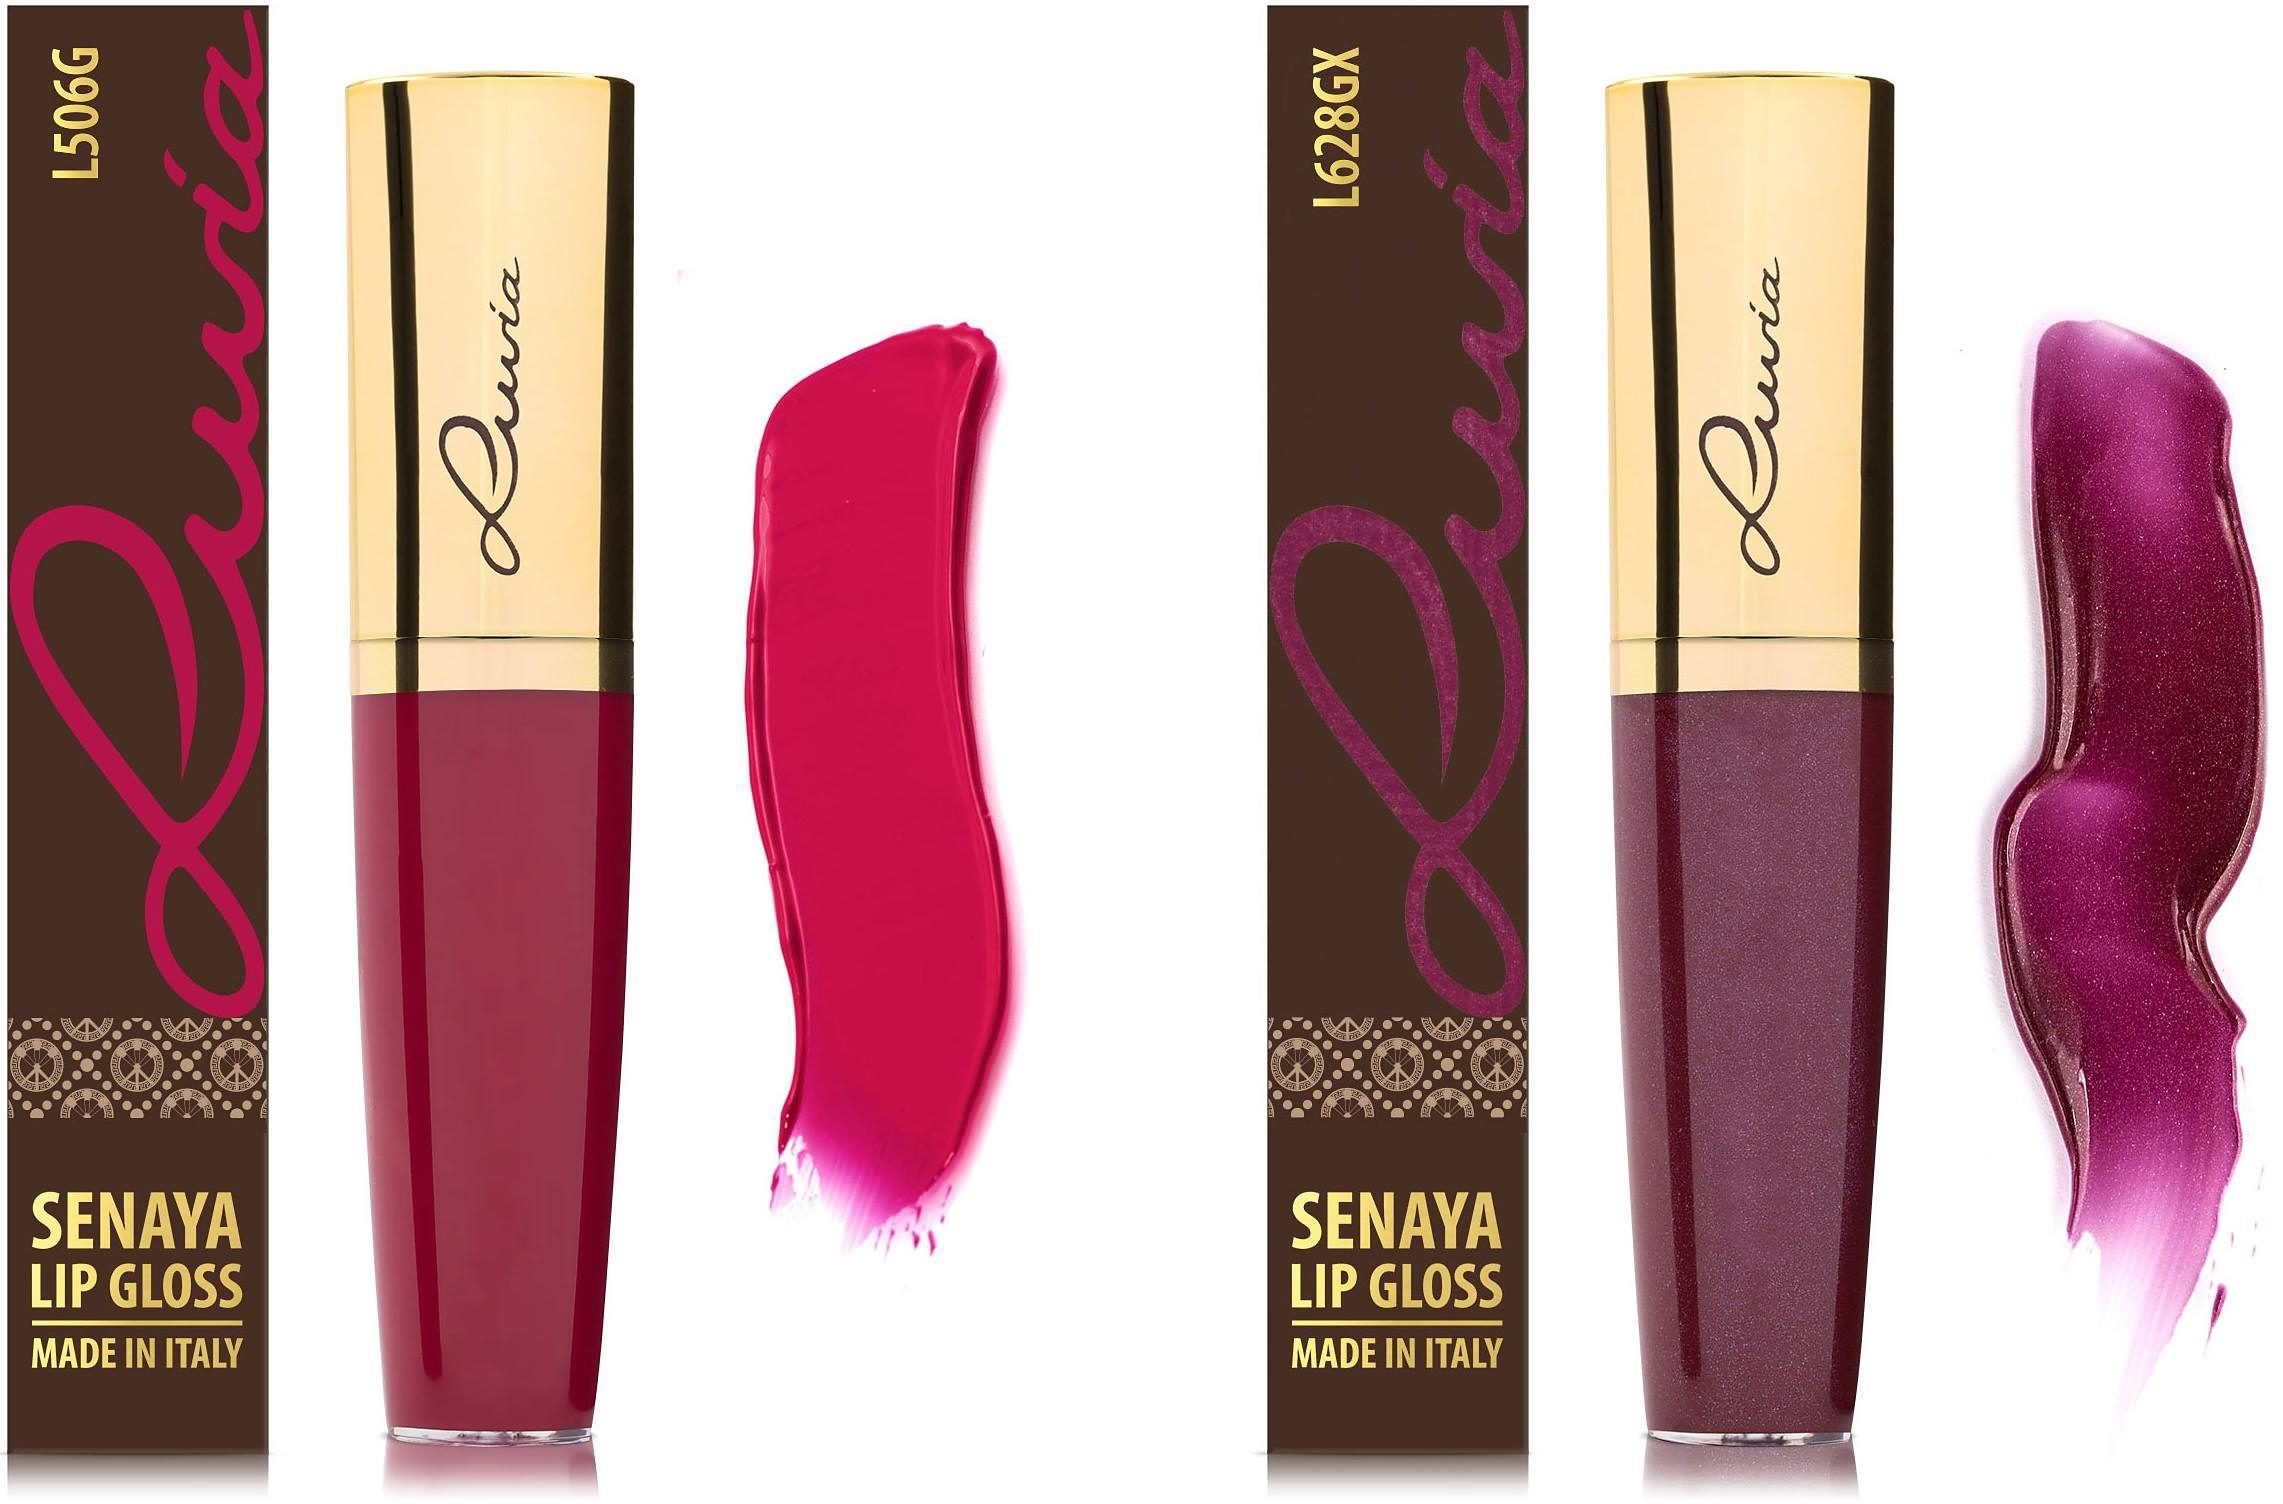 Lipgloss Senaya Luvia Colors, Cosmetics Luxurious 6-tlg.